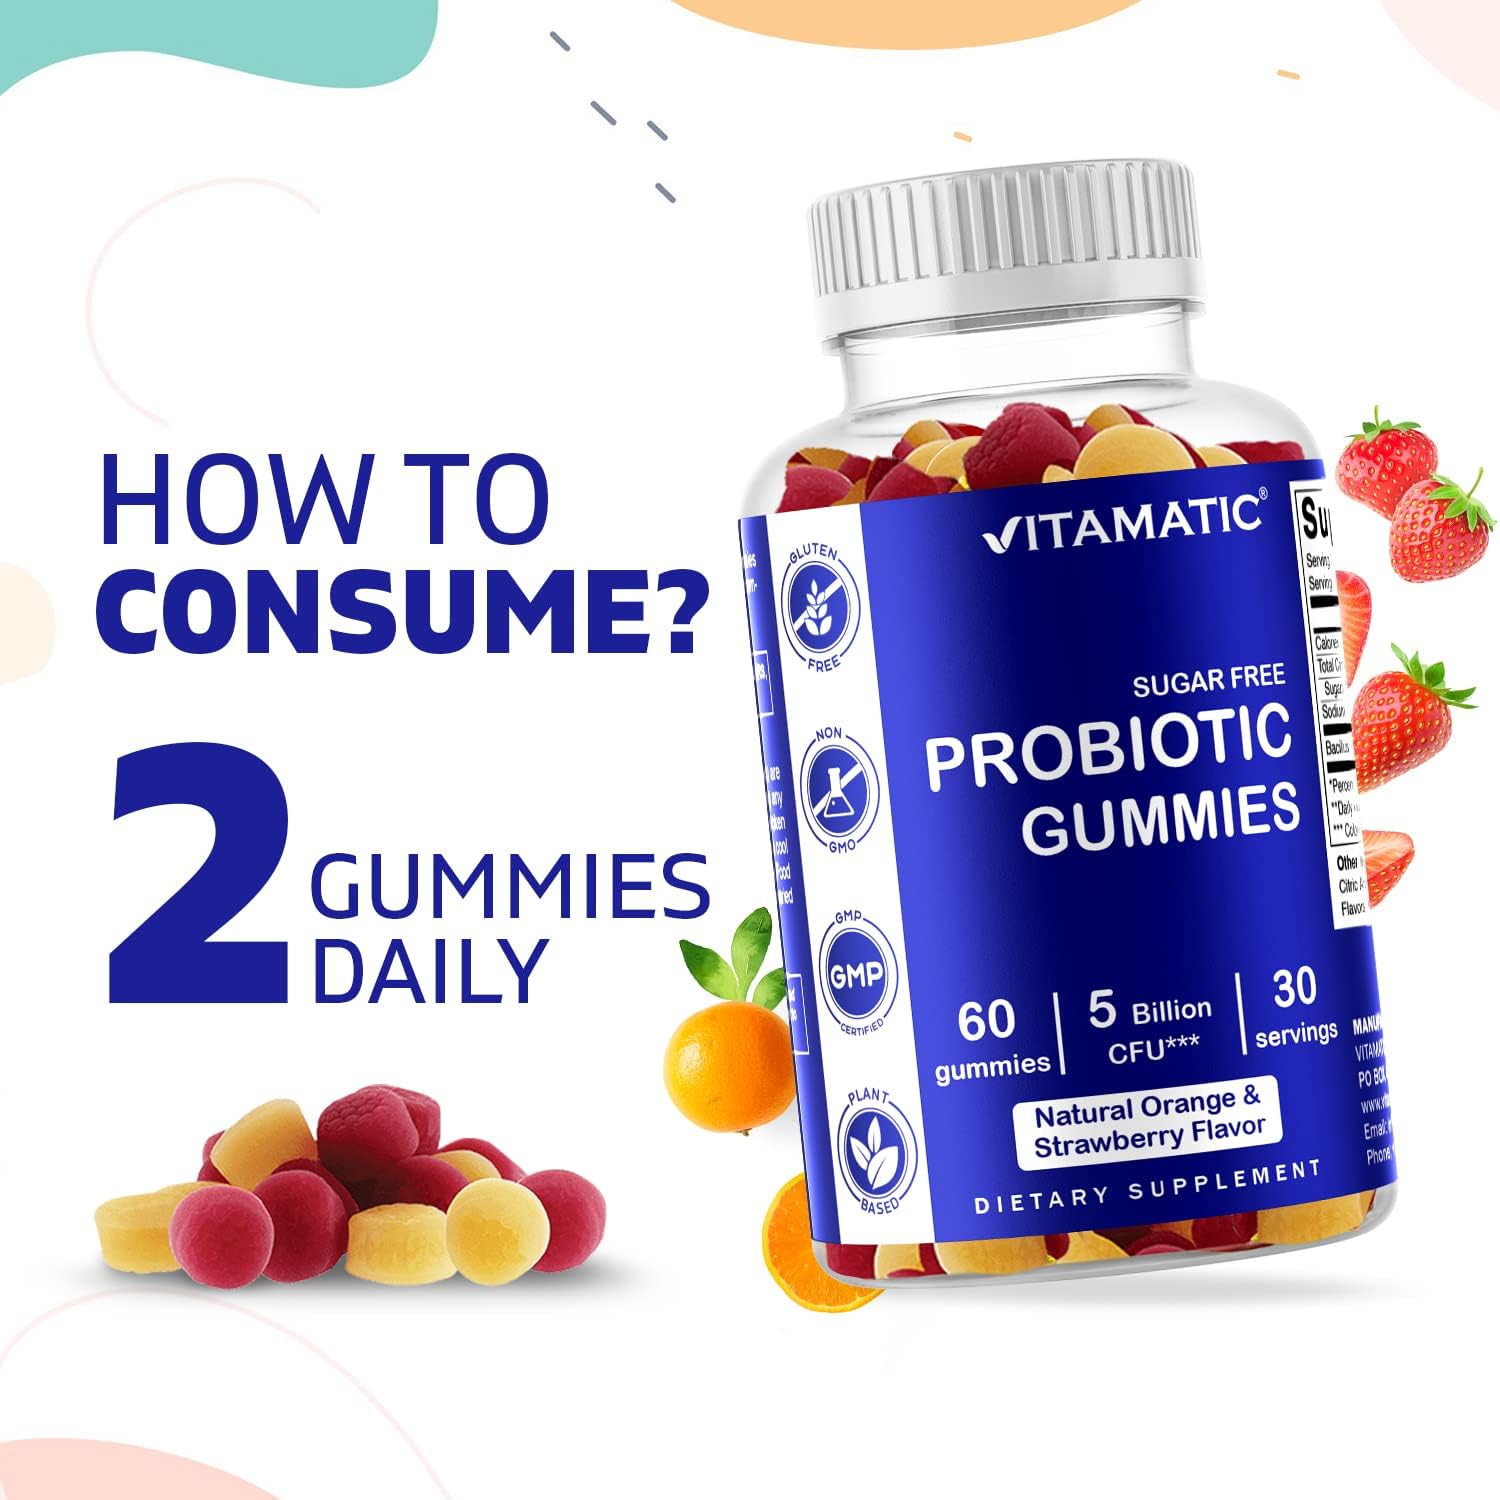 Vitamatic 2 Pack Sugar Free Probiotic Gummies for Men and Women 5 Billion CFUs - Digestive, Immune & Gut Health - Gluten Free : Health & Household